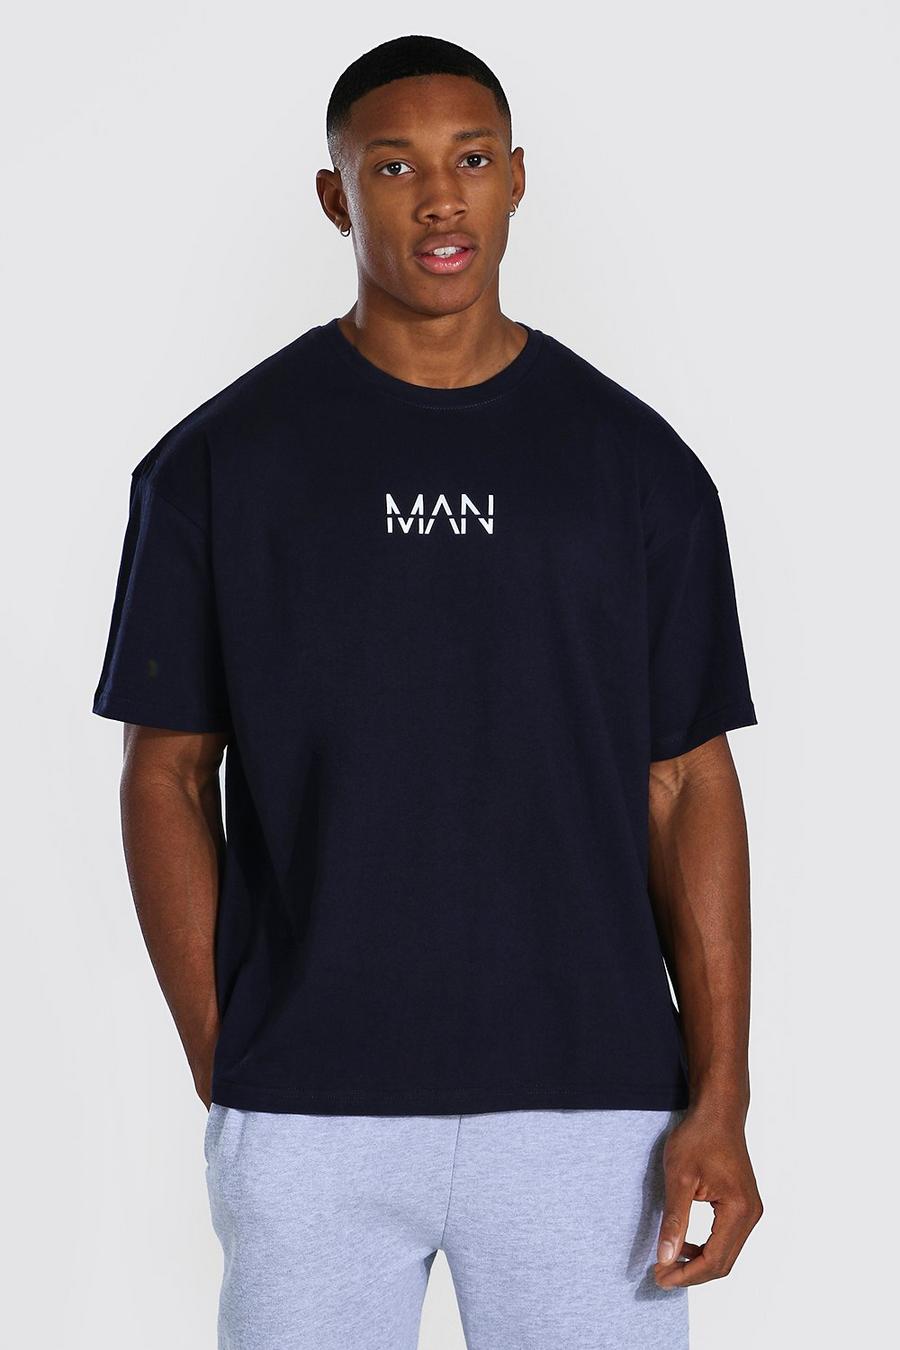 T-Shirt in Übergröße mit Original MAN-Print, Marineblau image number 1